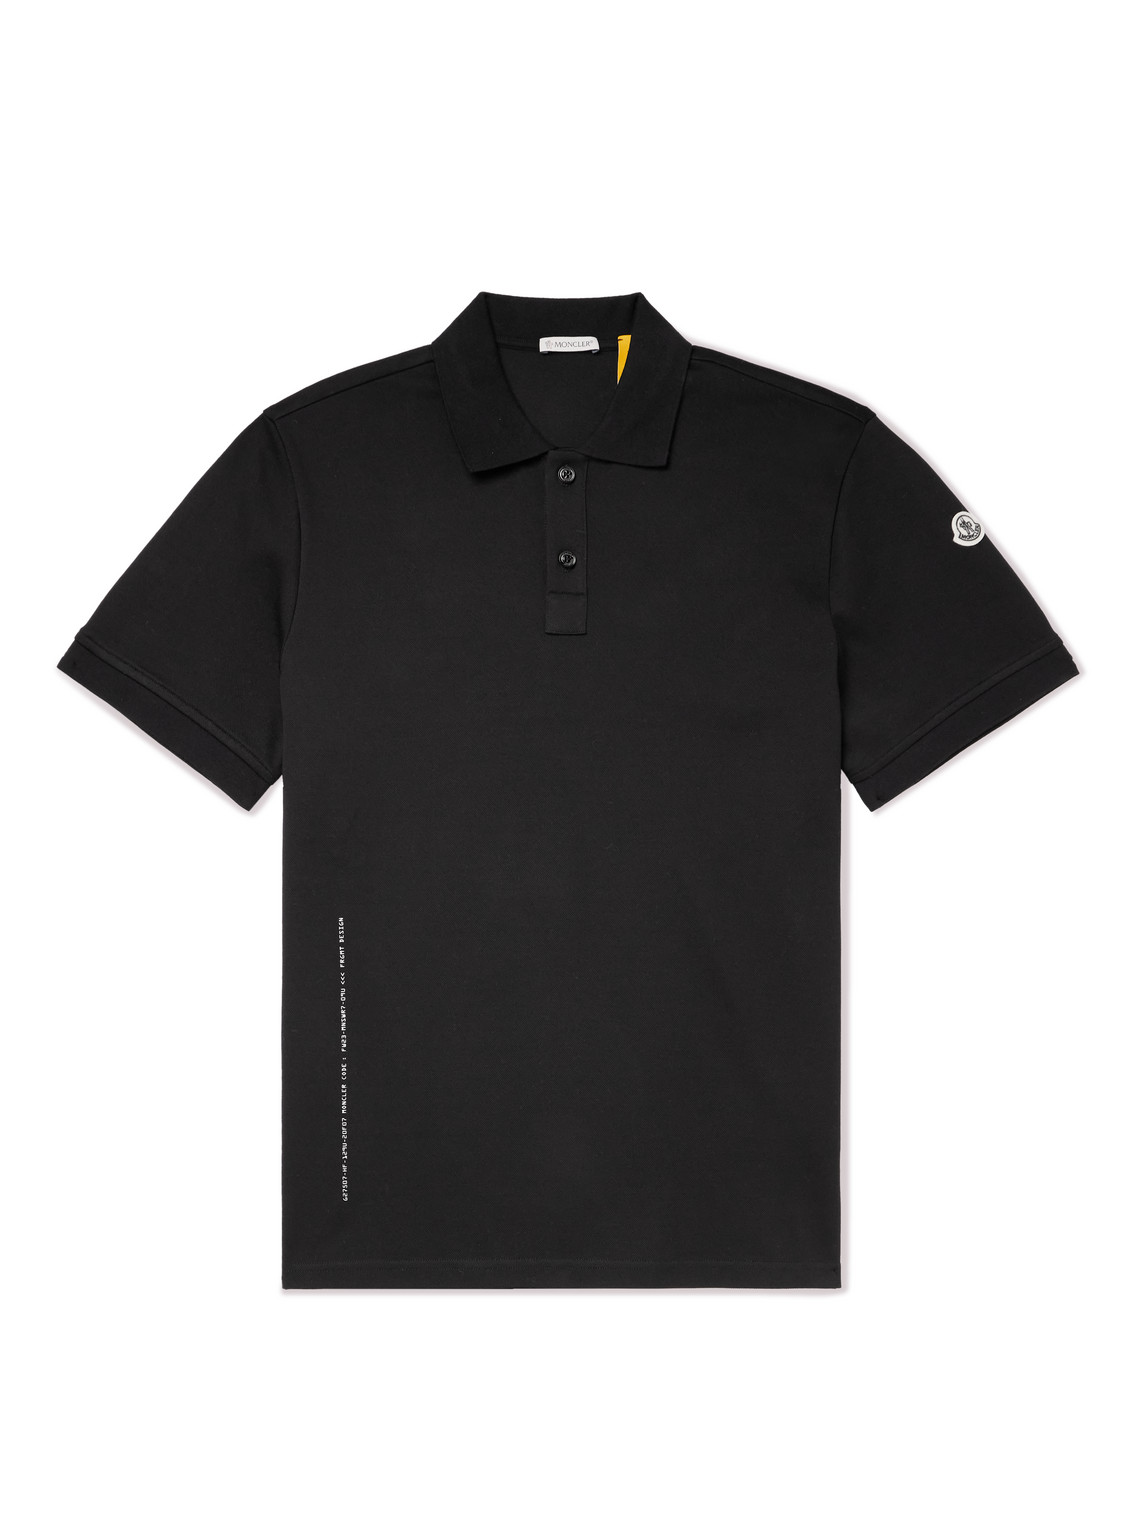 7 Moncler FRGMT Hiroshi Fujiwara Logo-Appliquéd Satin-Trimmed Cotton-Jersey Polo Shirt